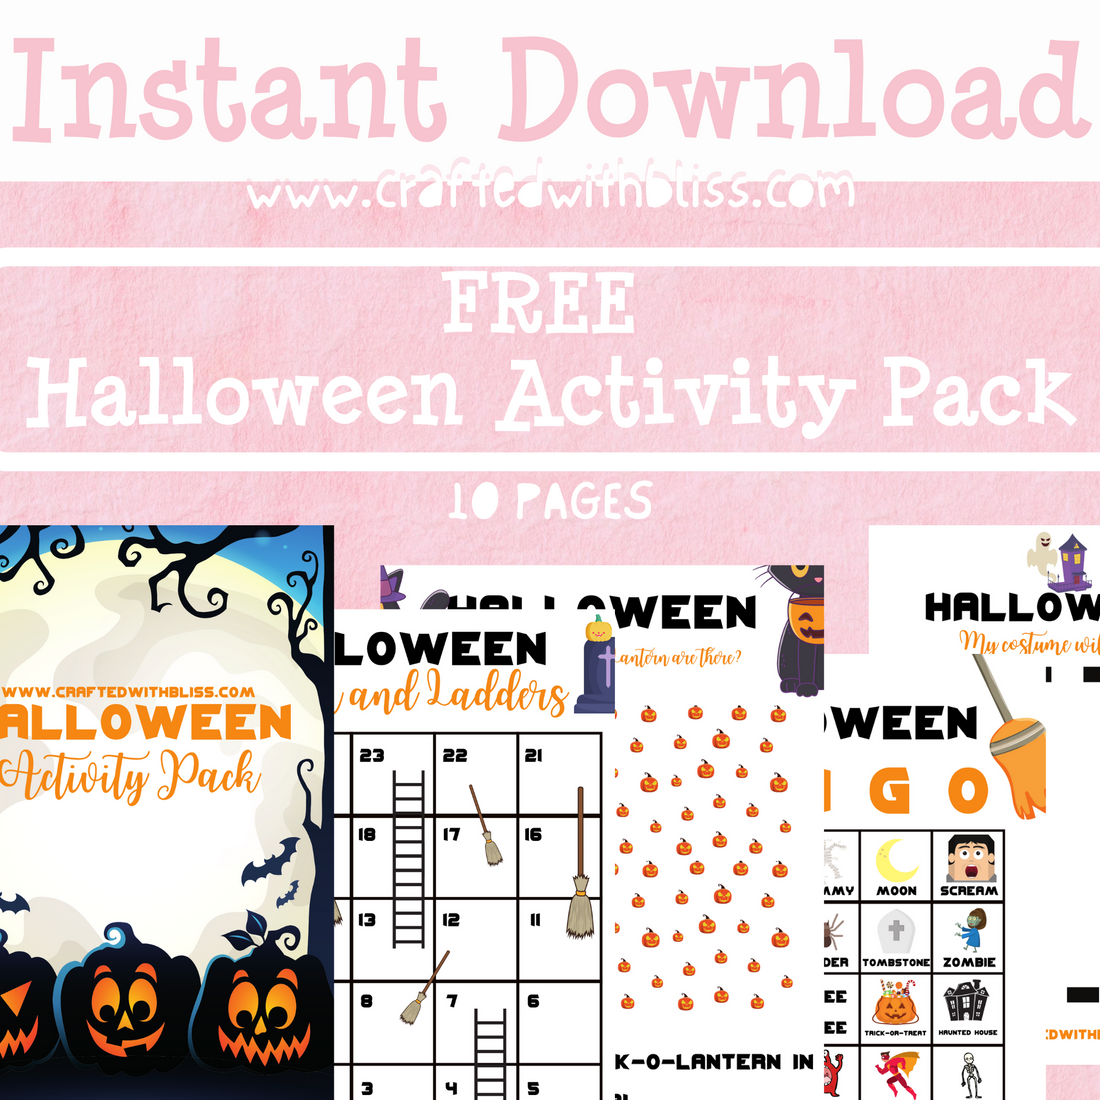 FREE Halloween Activity Pack